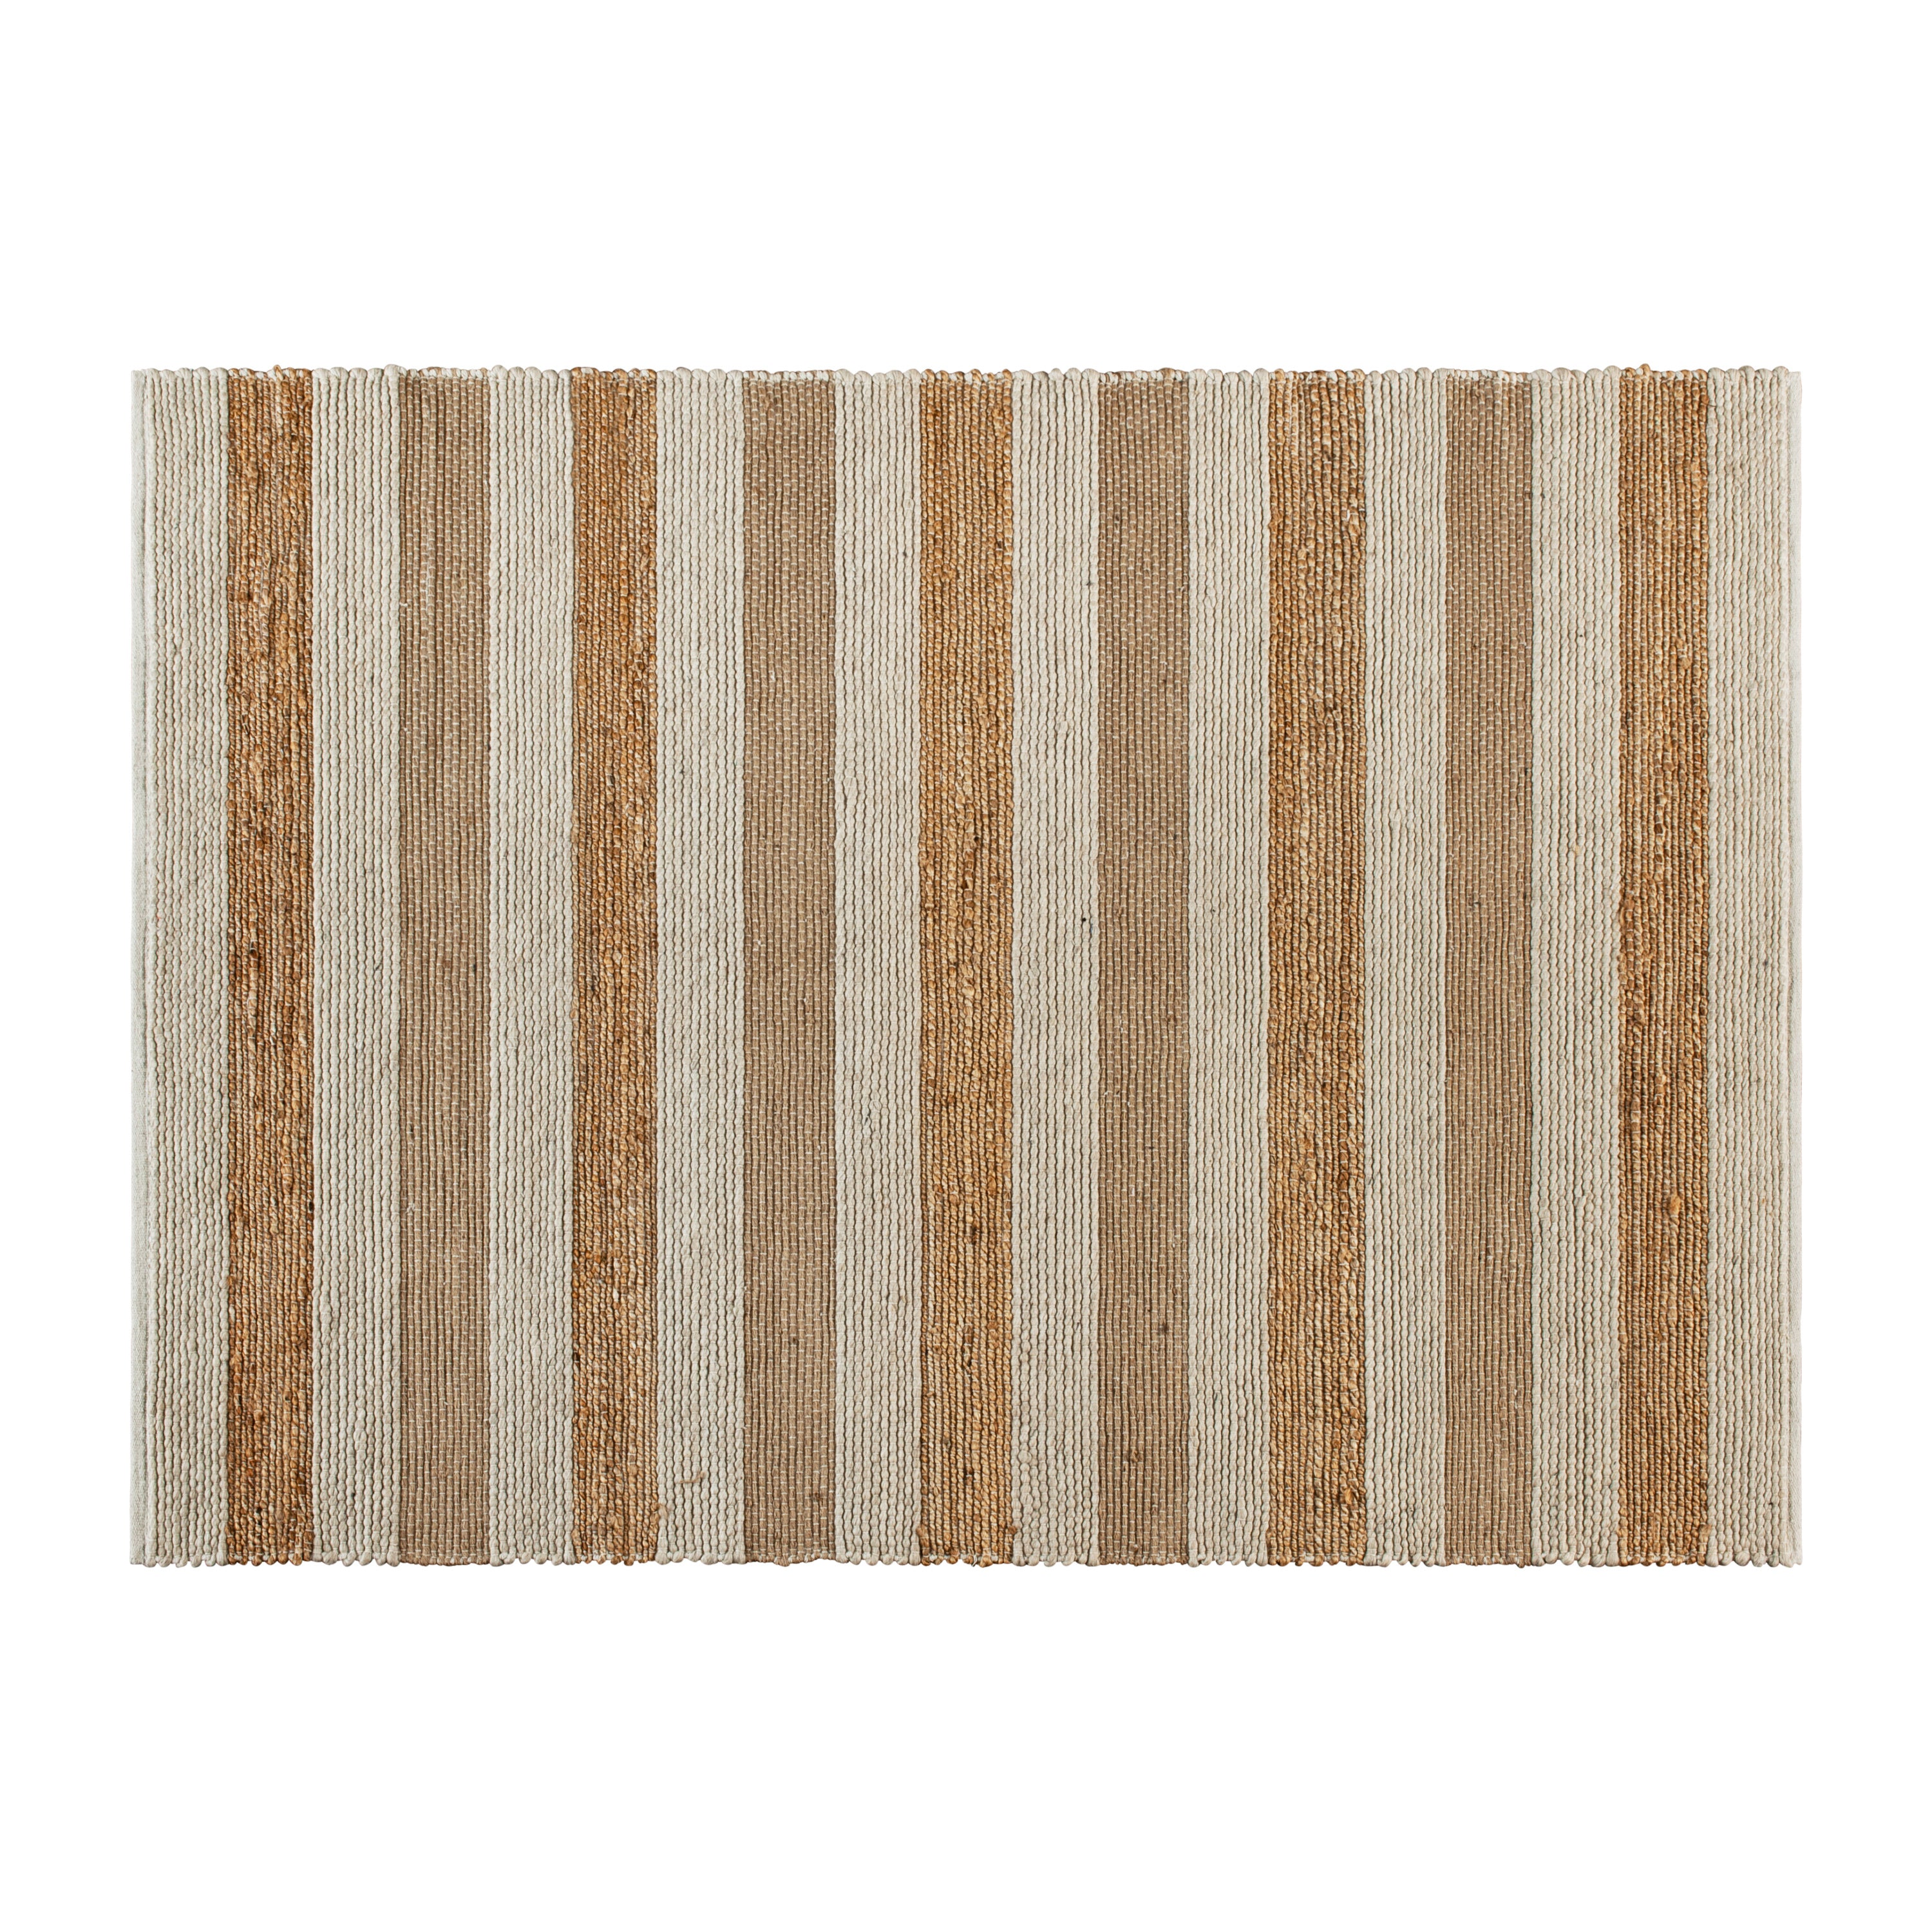 Handwoven Striped Jute Blend Area Rug in Tones-Indoor Area Rug-Flash Furniture-Wall2Wall Furnishings